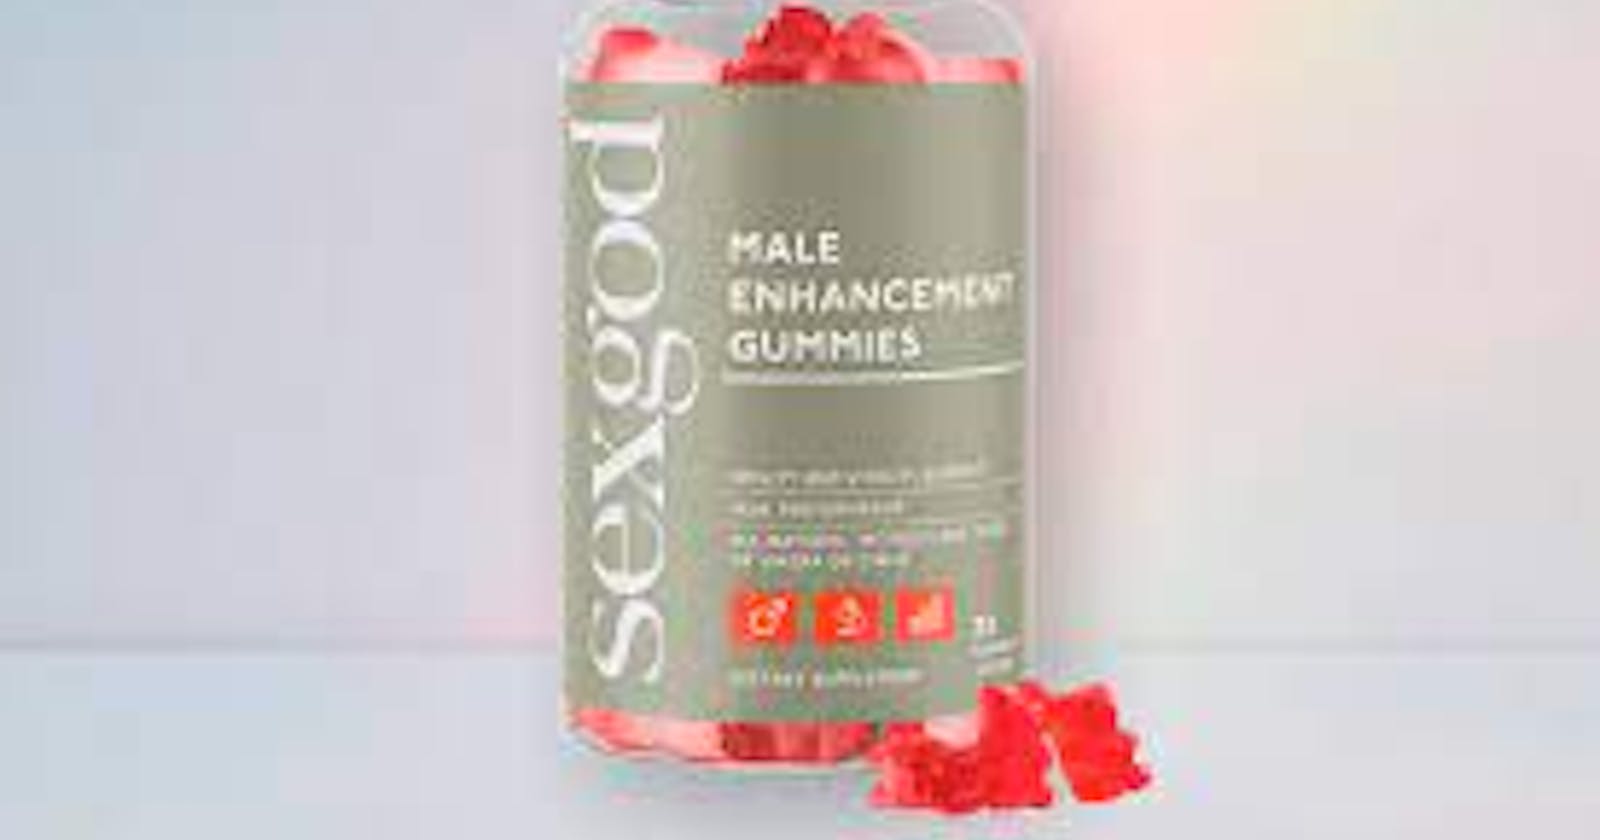 Sexgod Male Enhancement Gummies Supplement